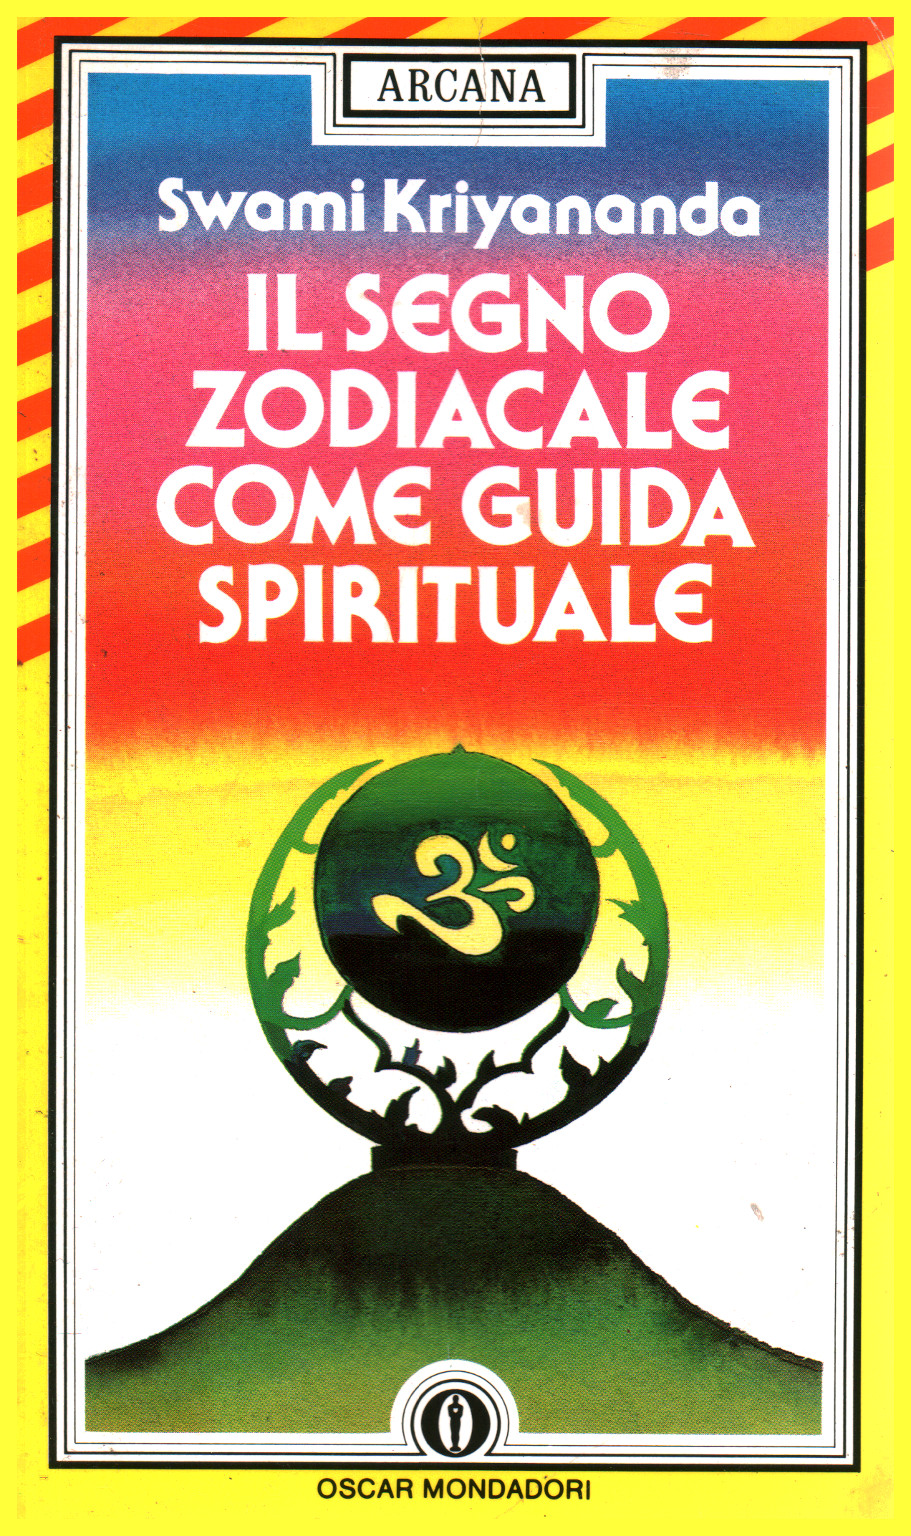 The zodiac sign as a spiritual guide, s.a.